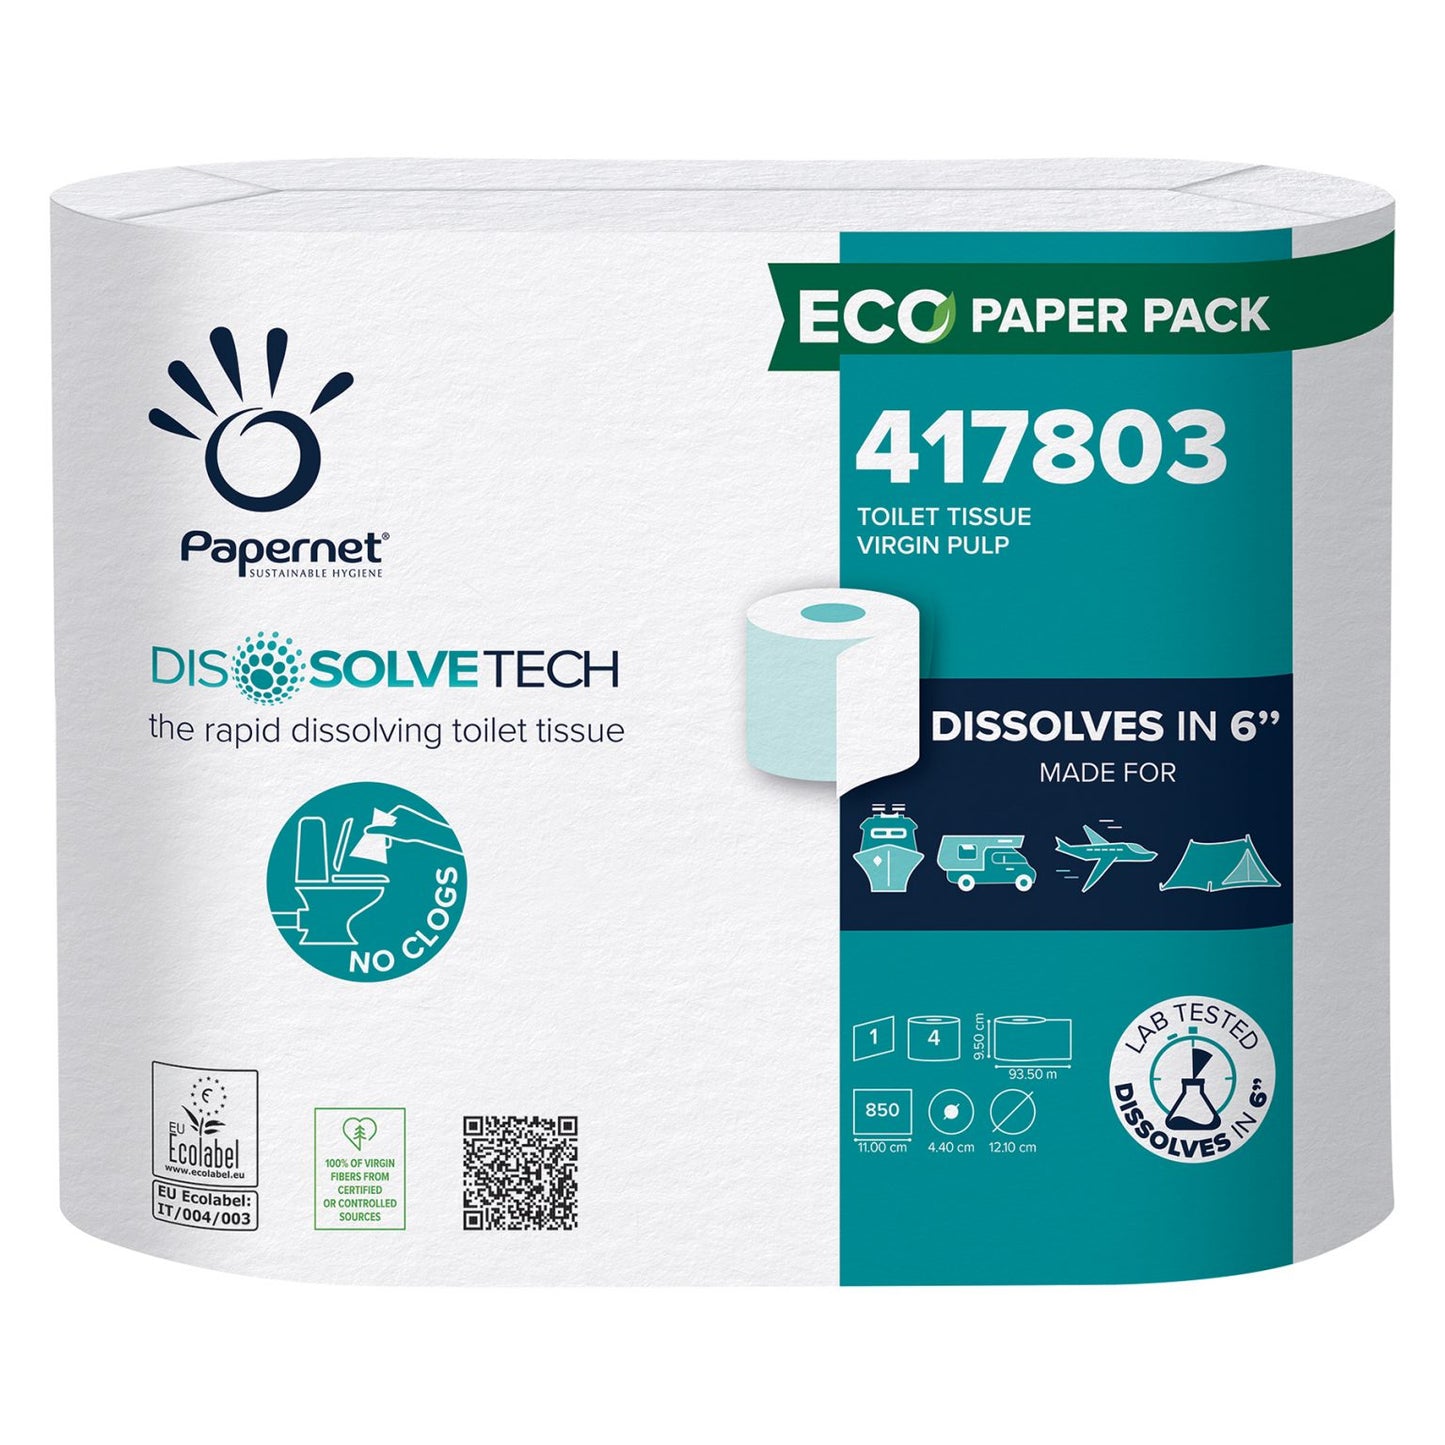 Toilet Tissue with Dissolve Tech Technology